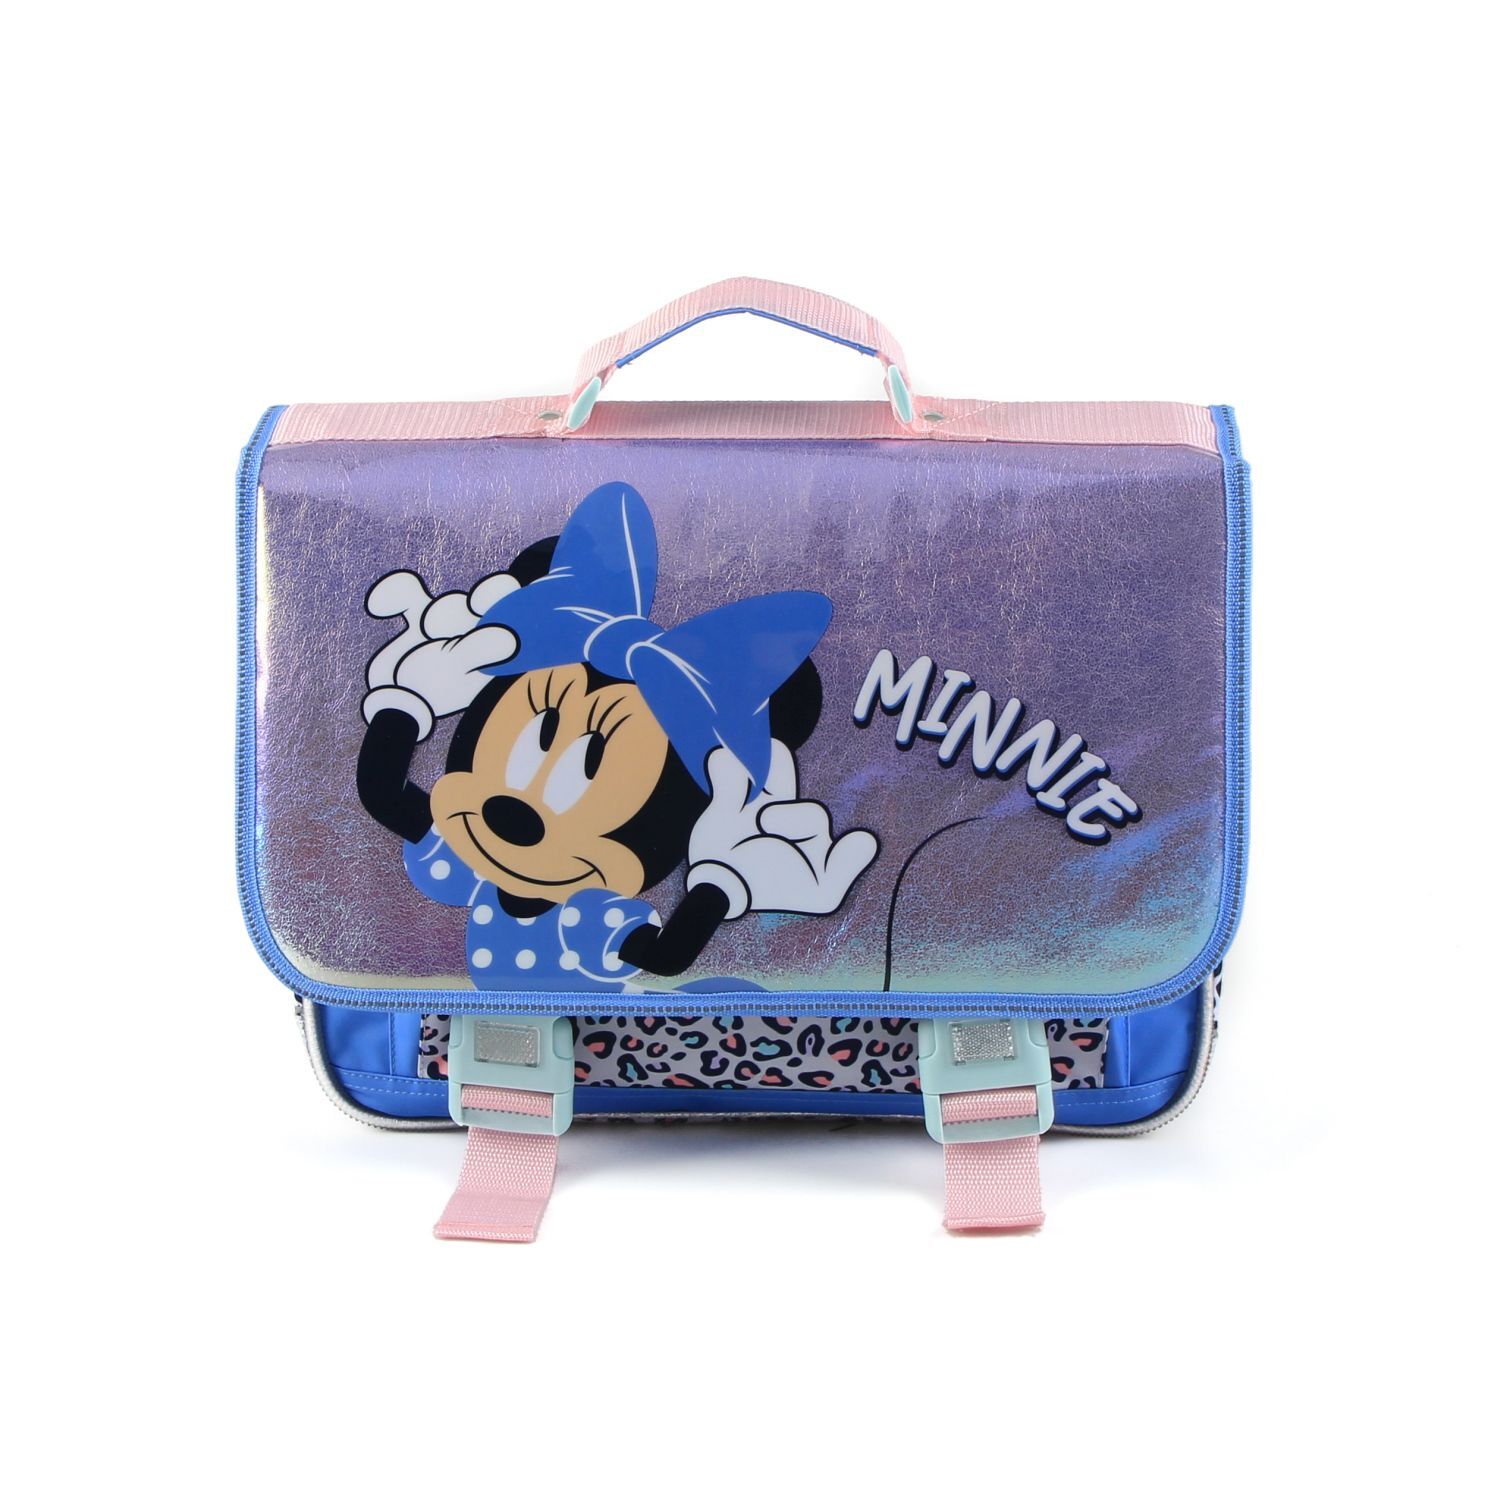 Рюкзак Disney Minnie Mouse Minnie Maus Leopard Schul Blaue Schleife 41cm, синий